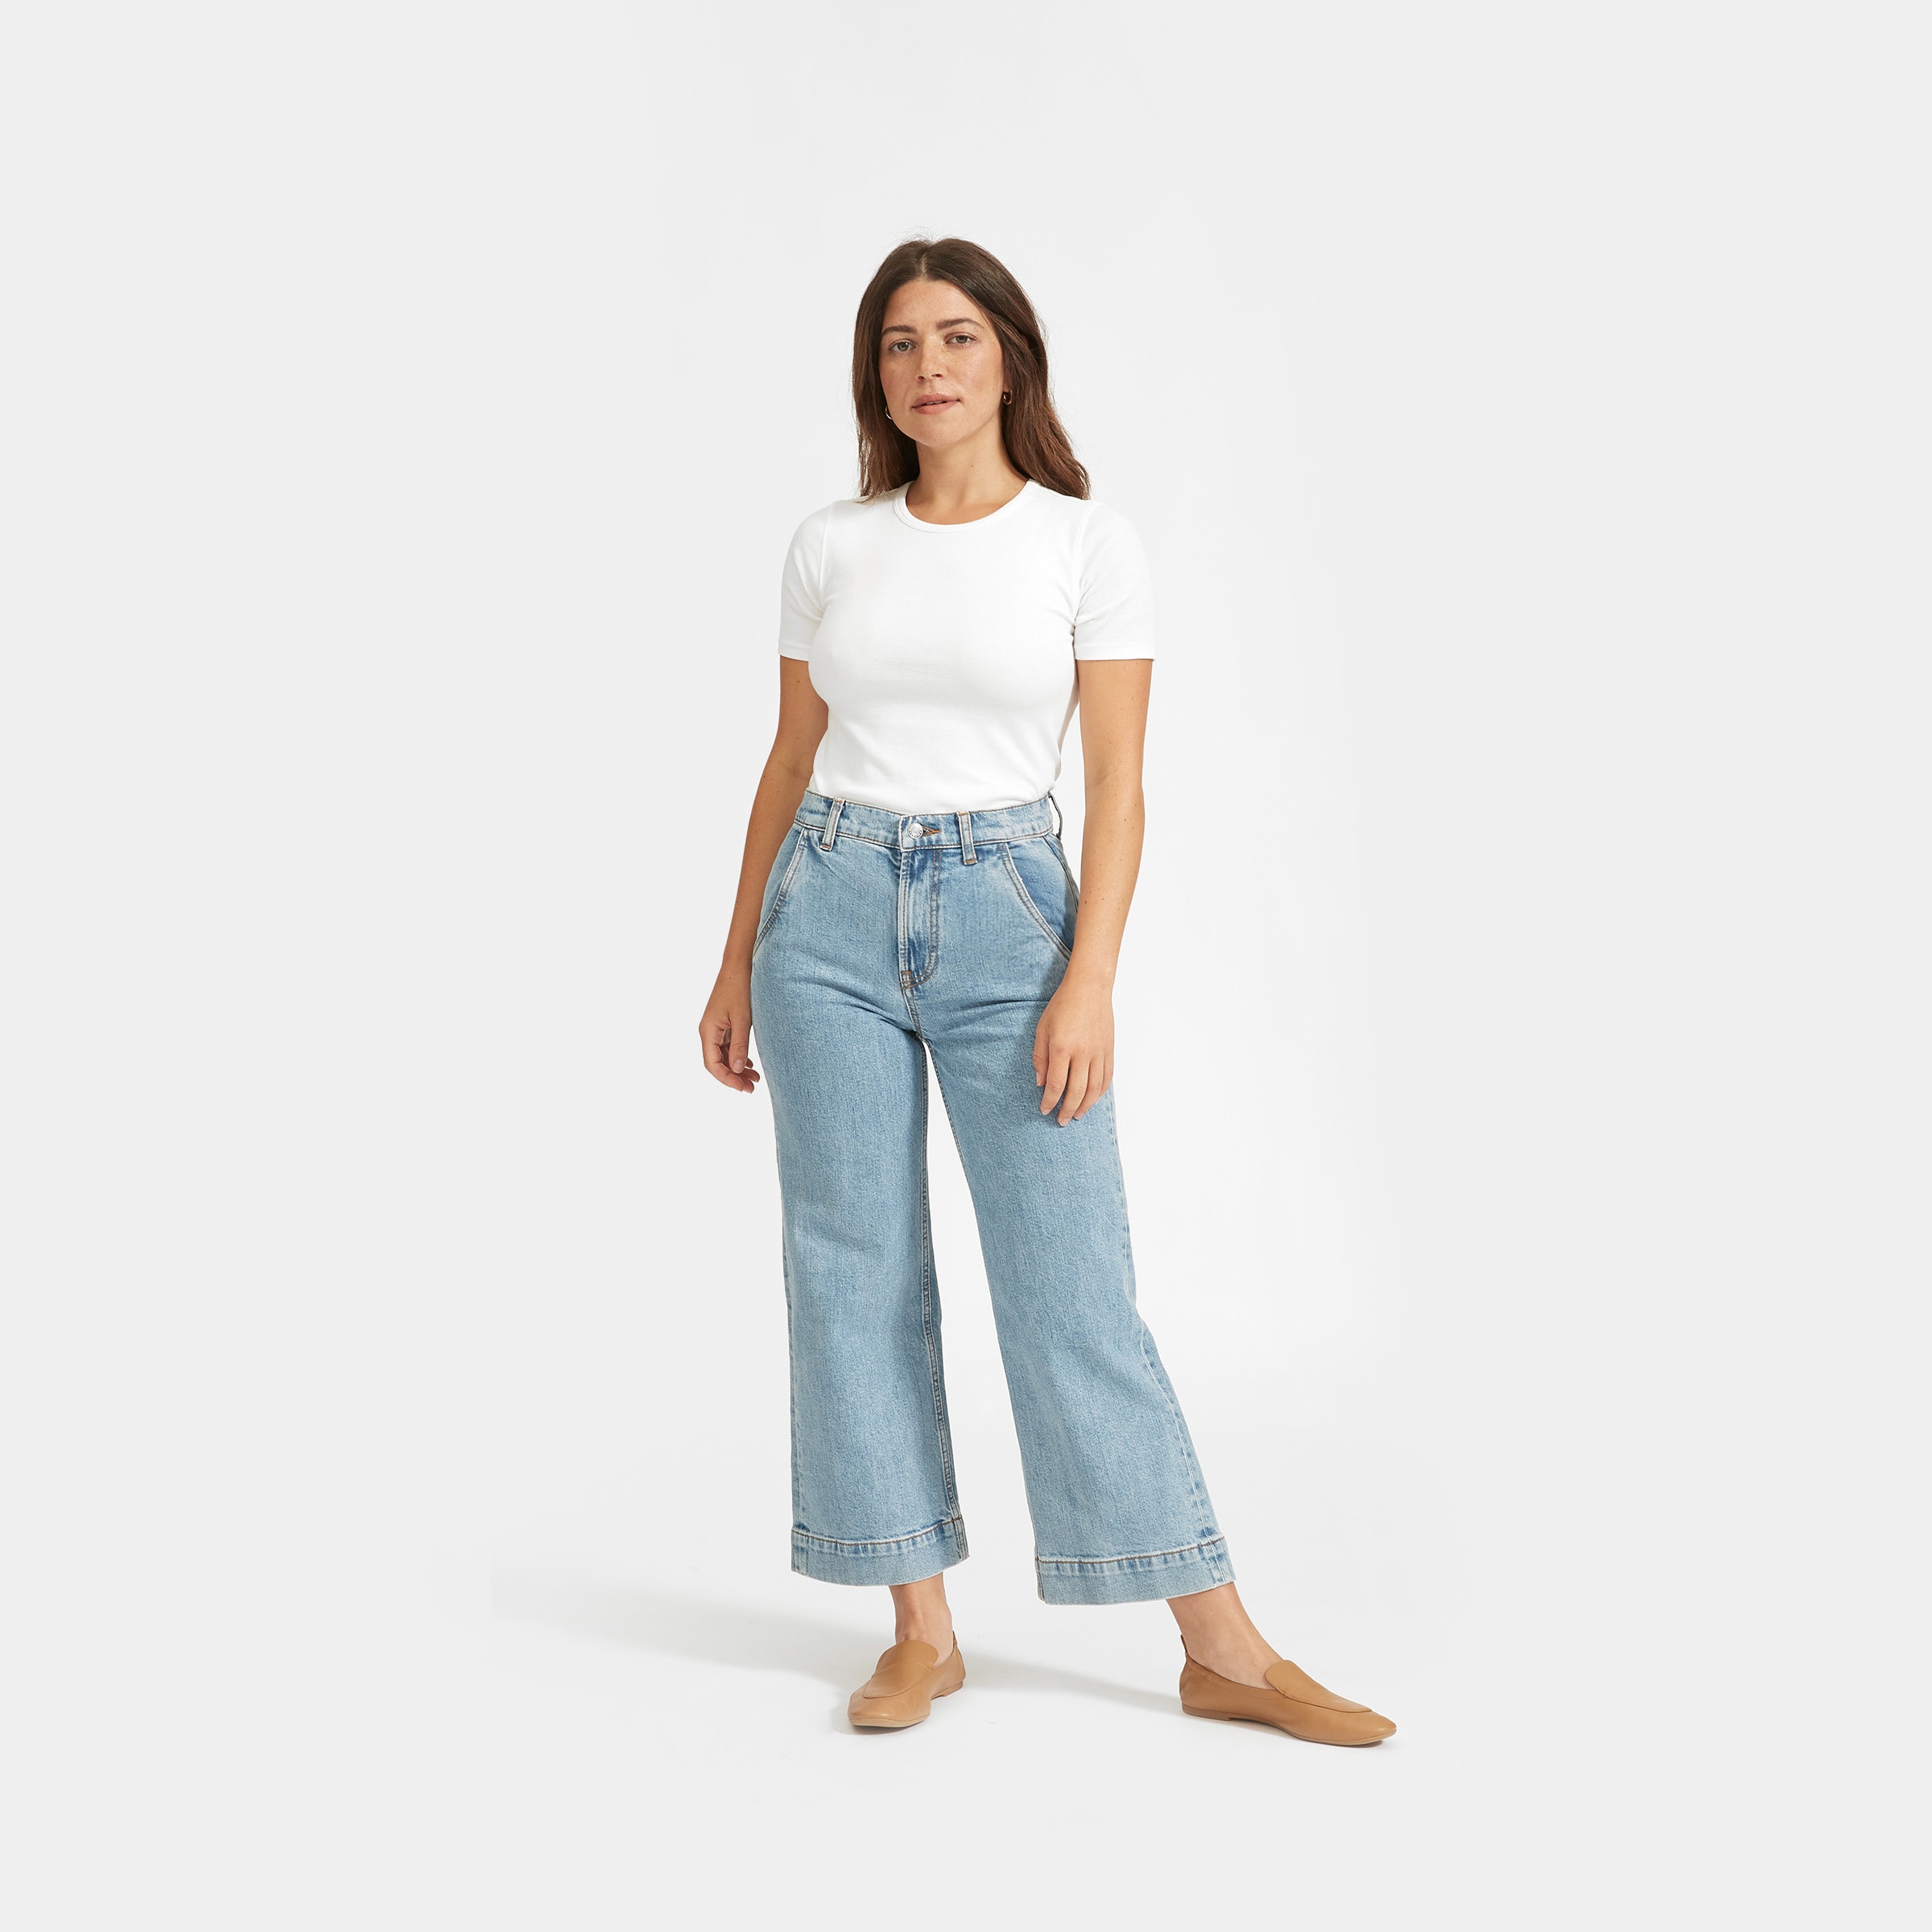 everlane-wide-leg-jeans - By Lauren M